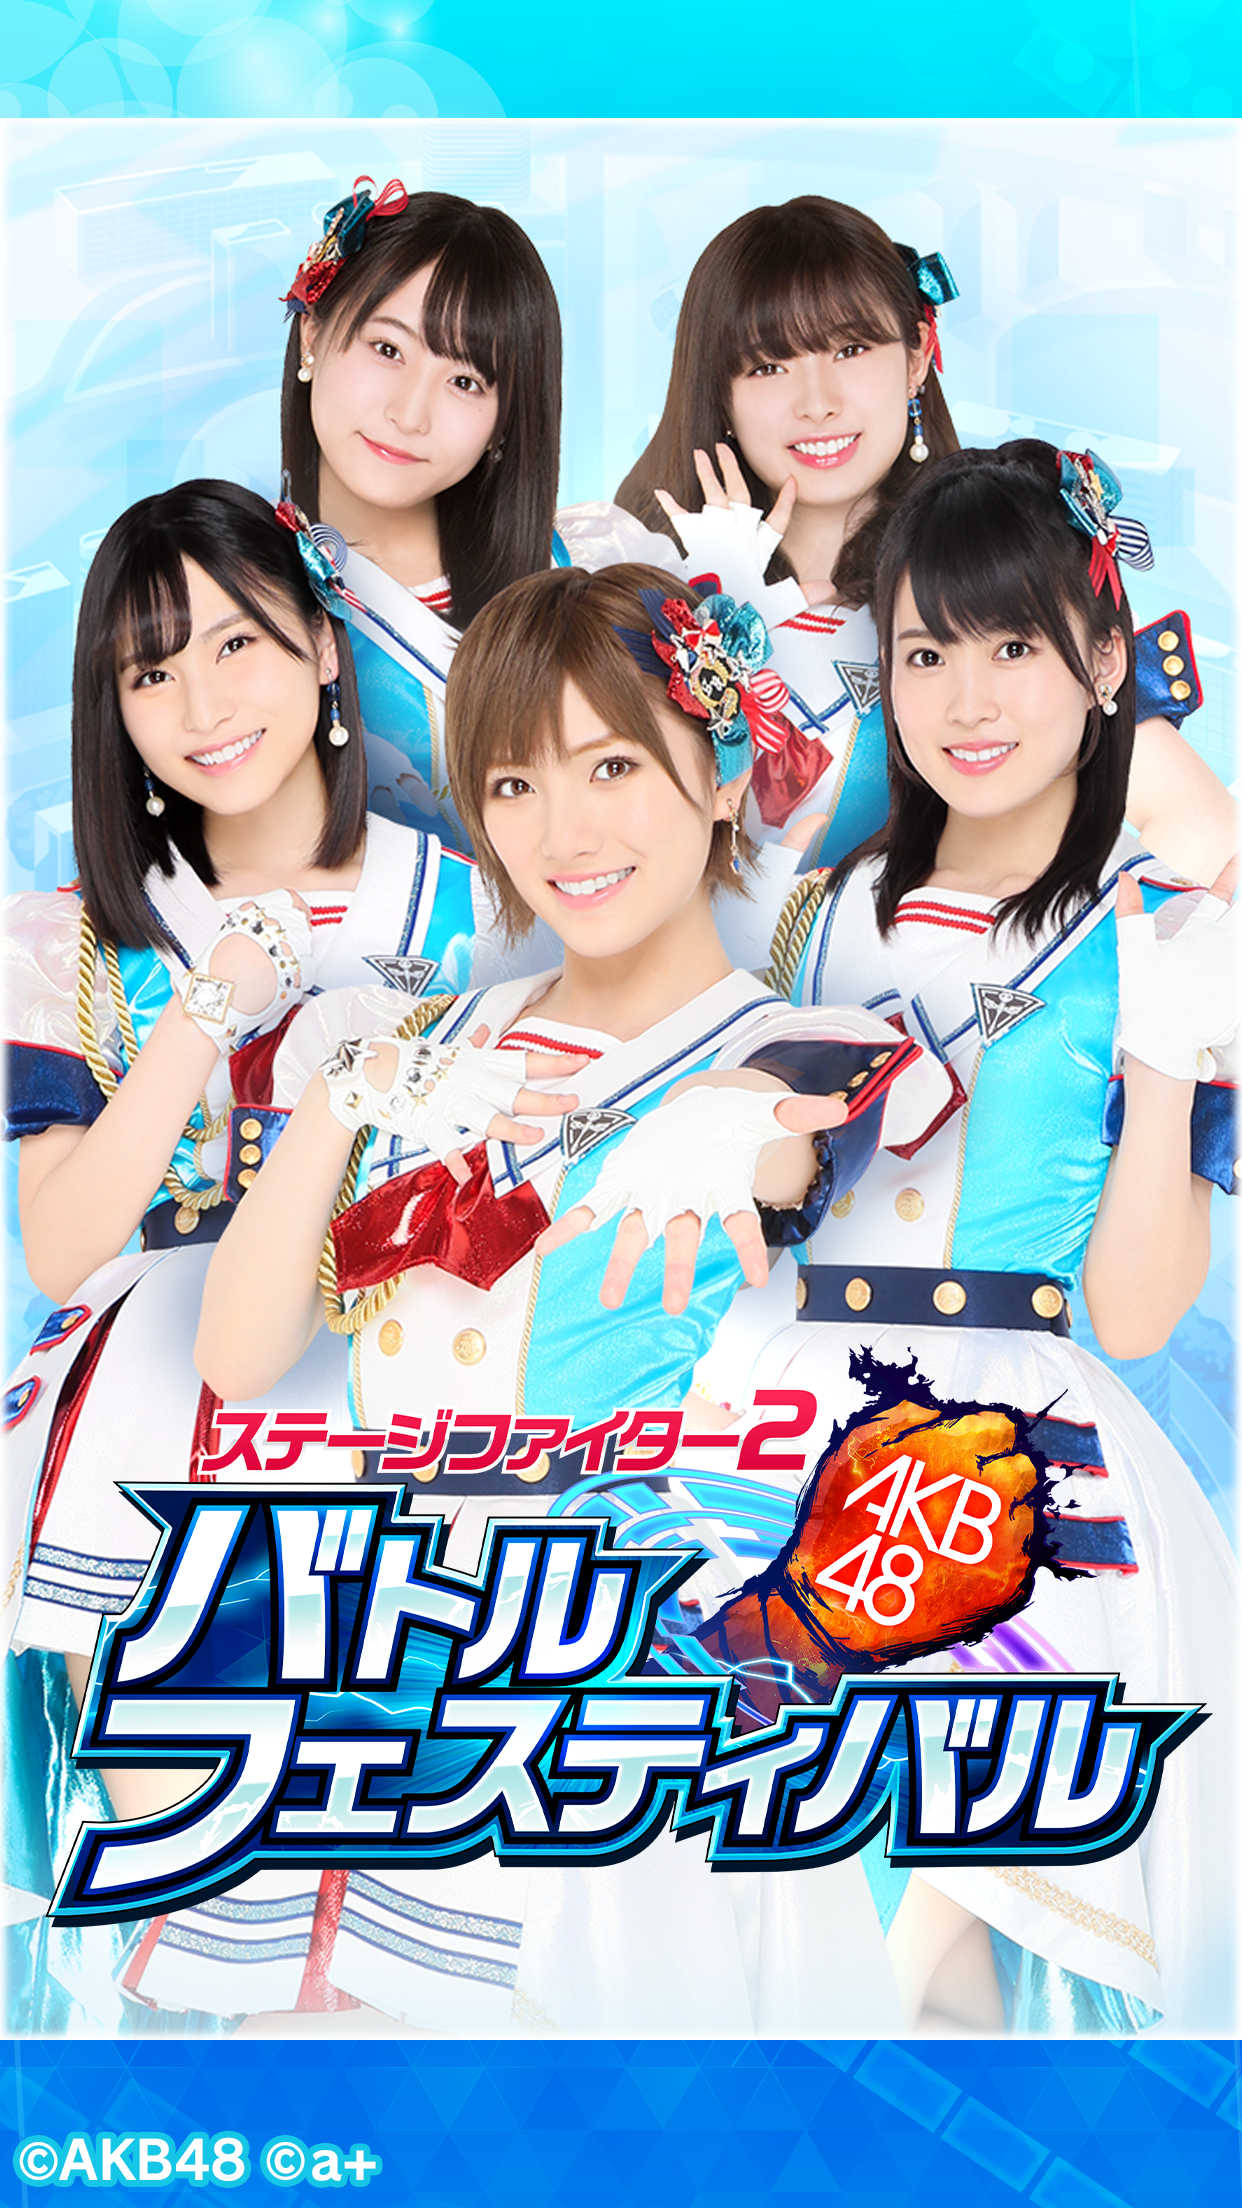 Screenshot 1 of Боевой фестиваль AKB48 Stage Fighter 2 3.9.5